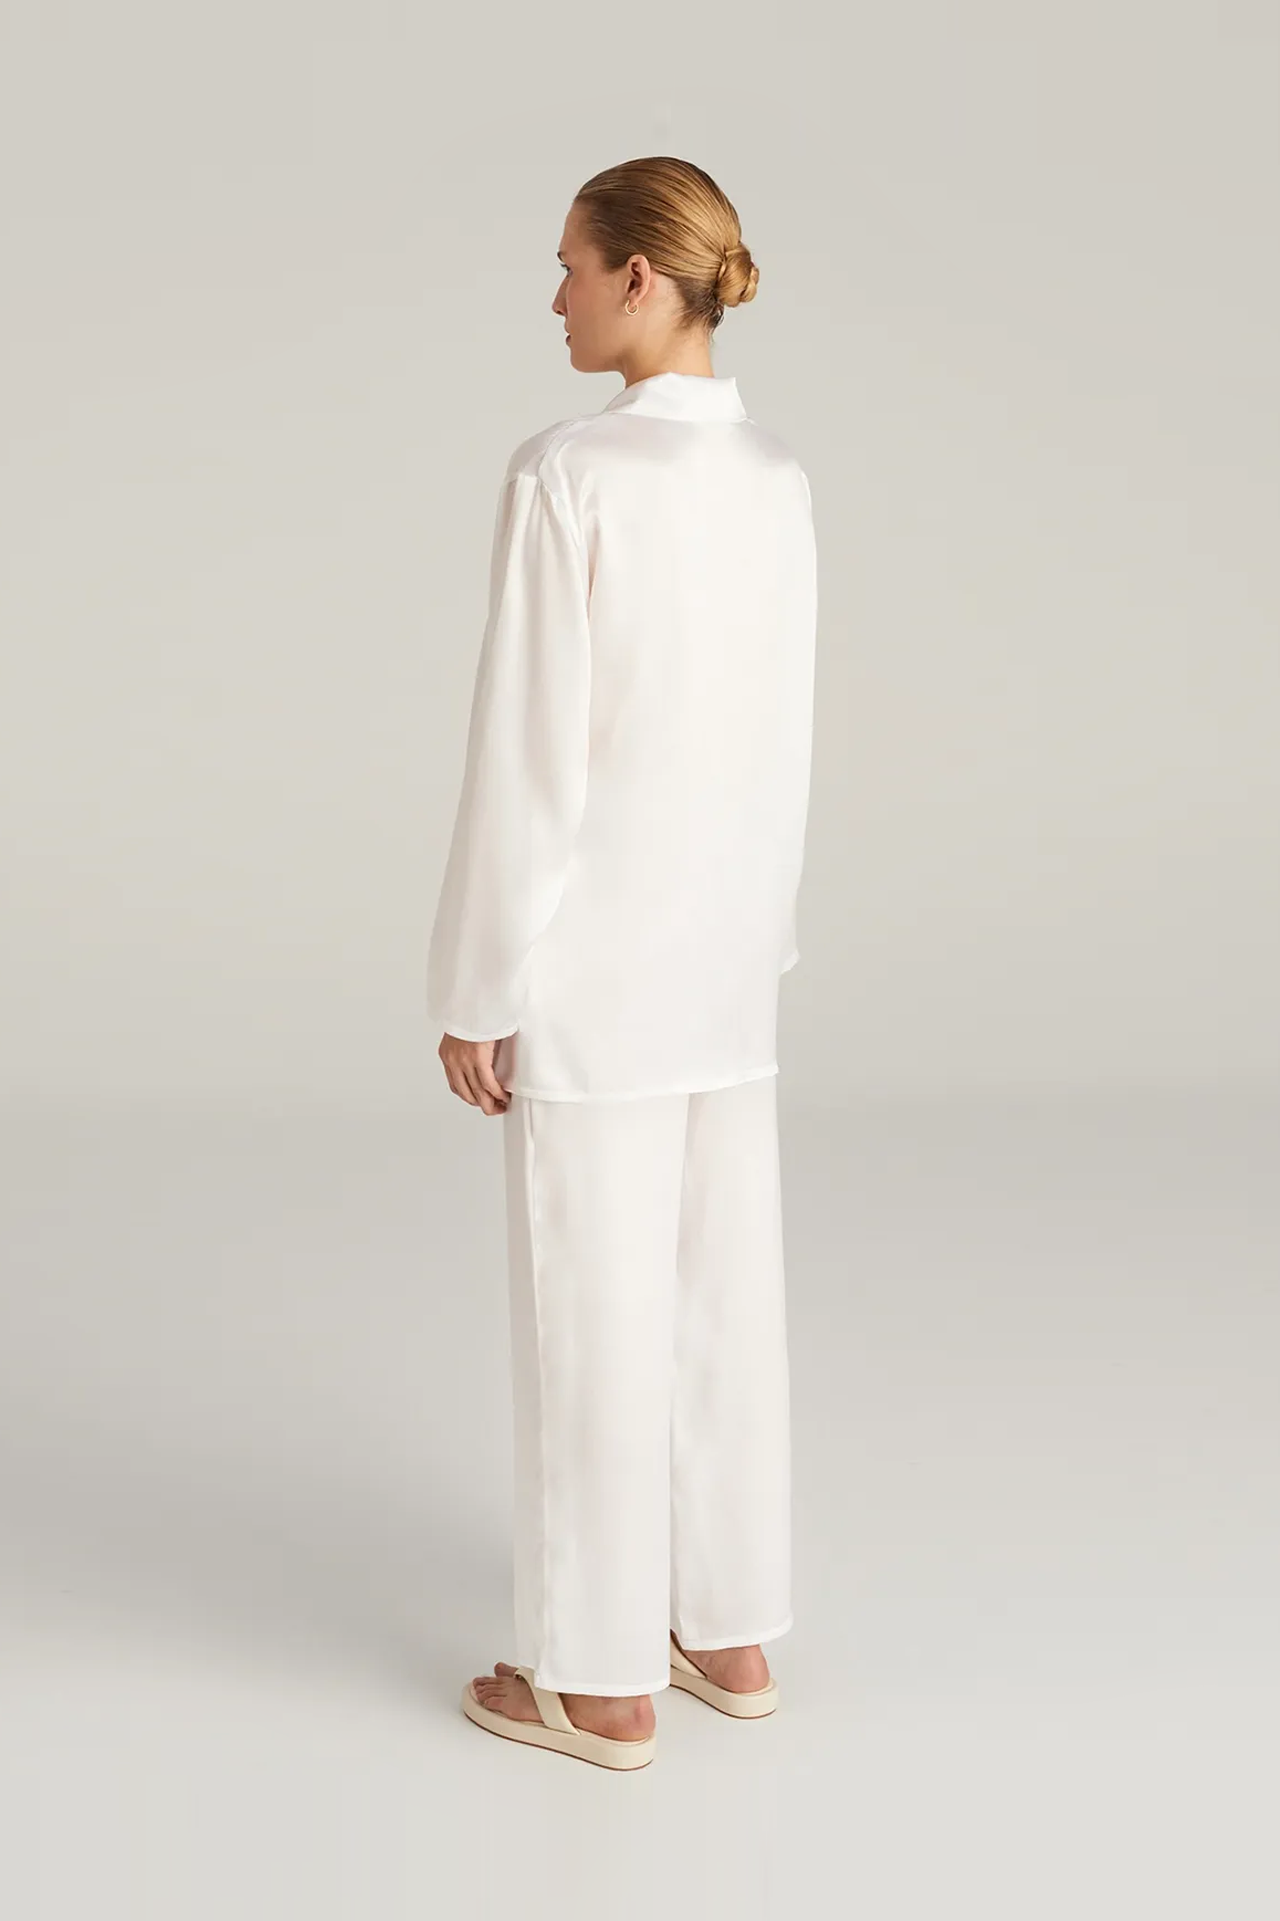 Silk satin pyjama set: white oversized shirt and wide leg pants